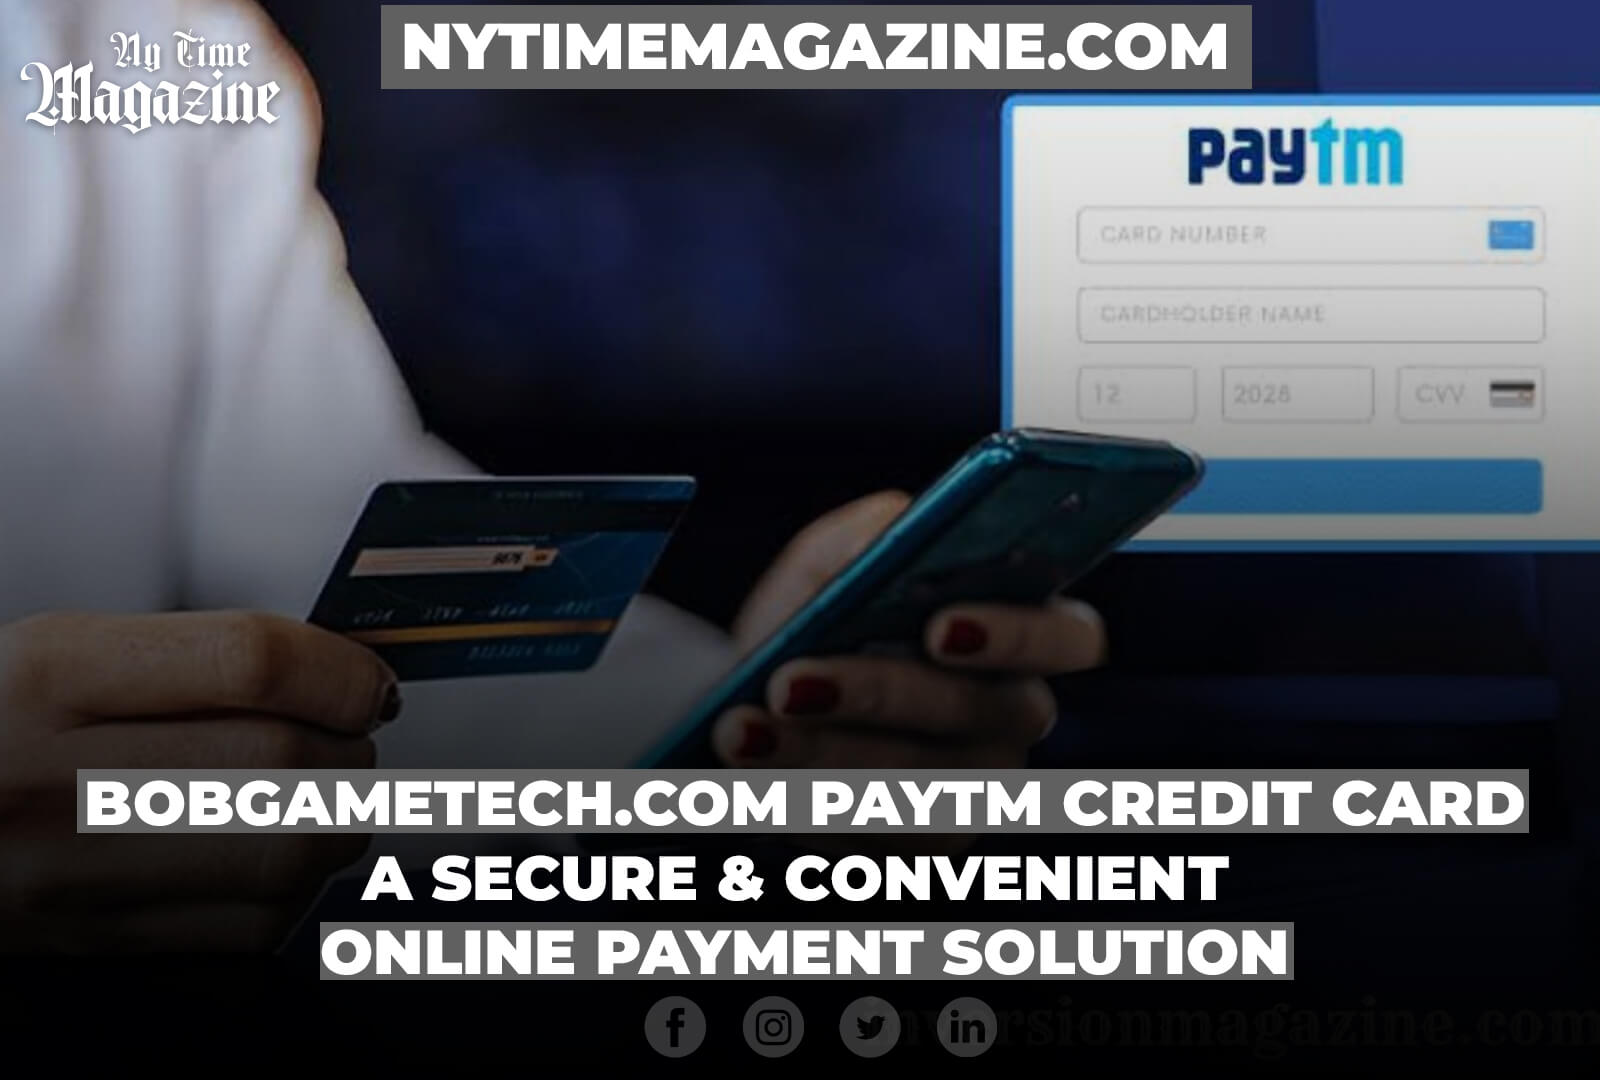 Bobgametech.com Paytm Credit Card: A Secure and Convenient Online Payment Solution